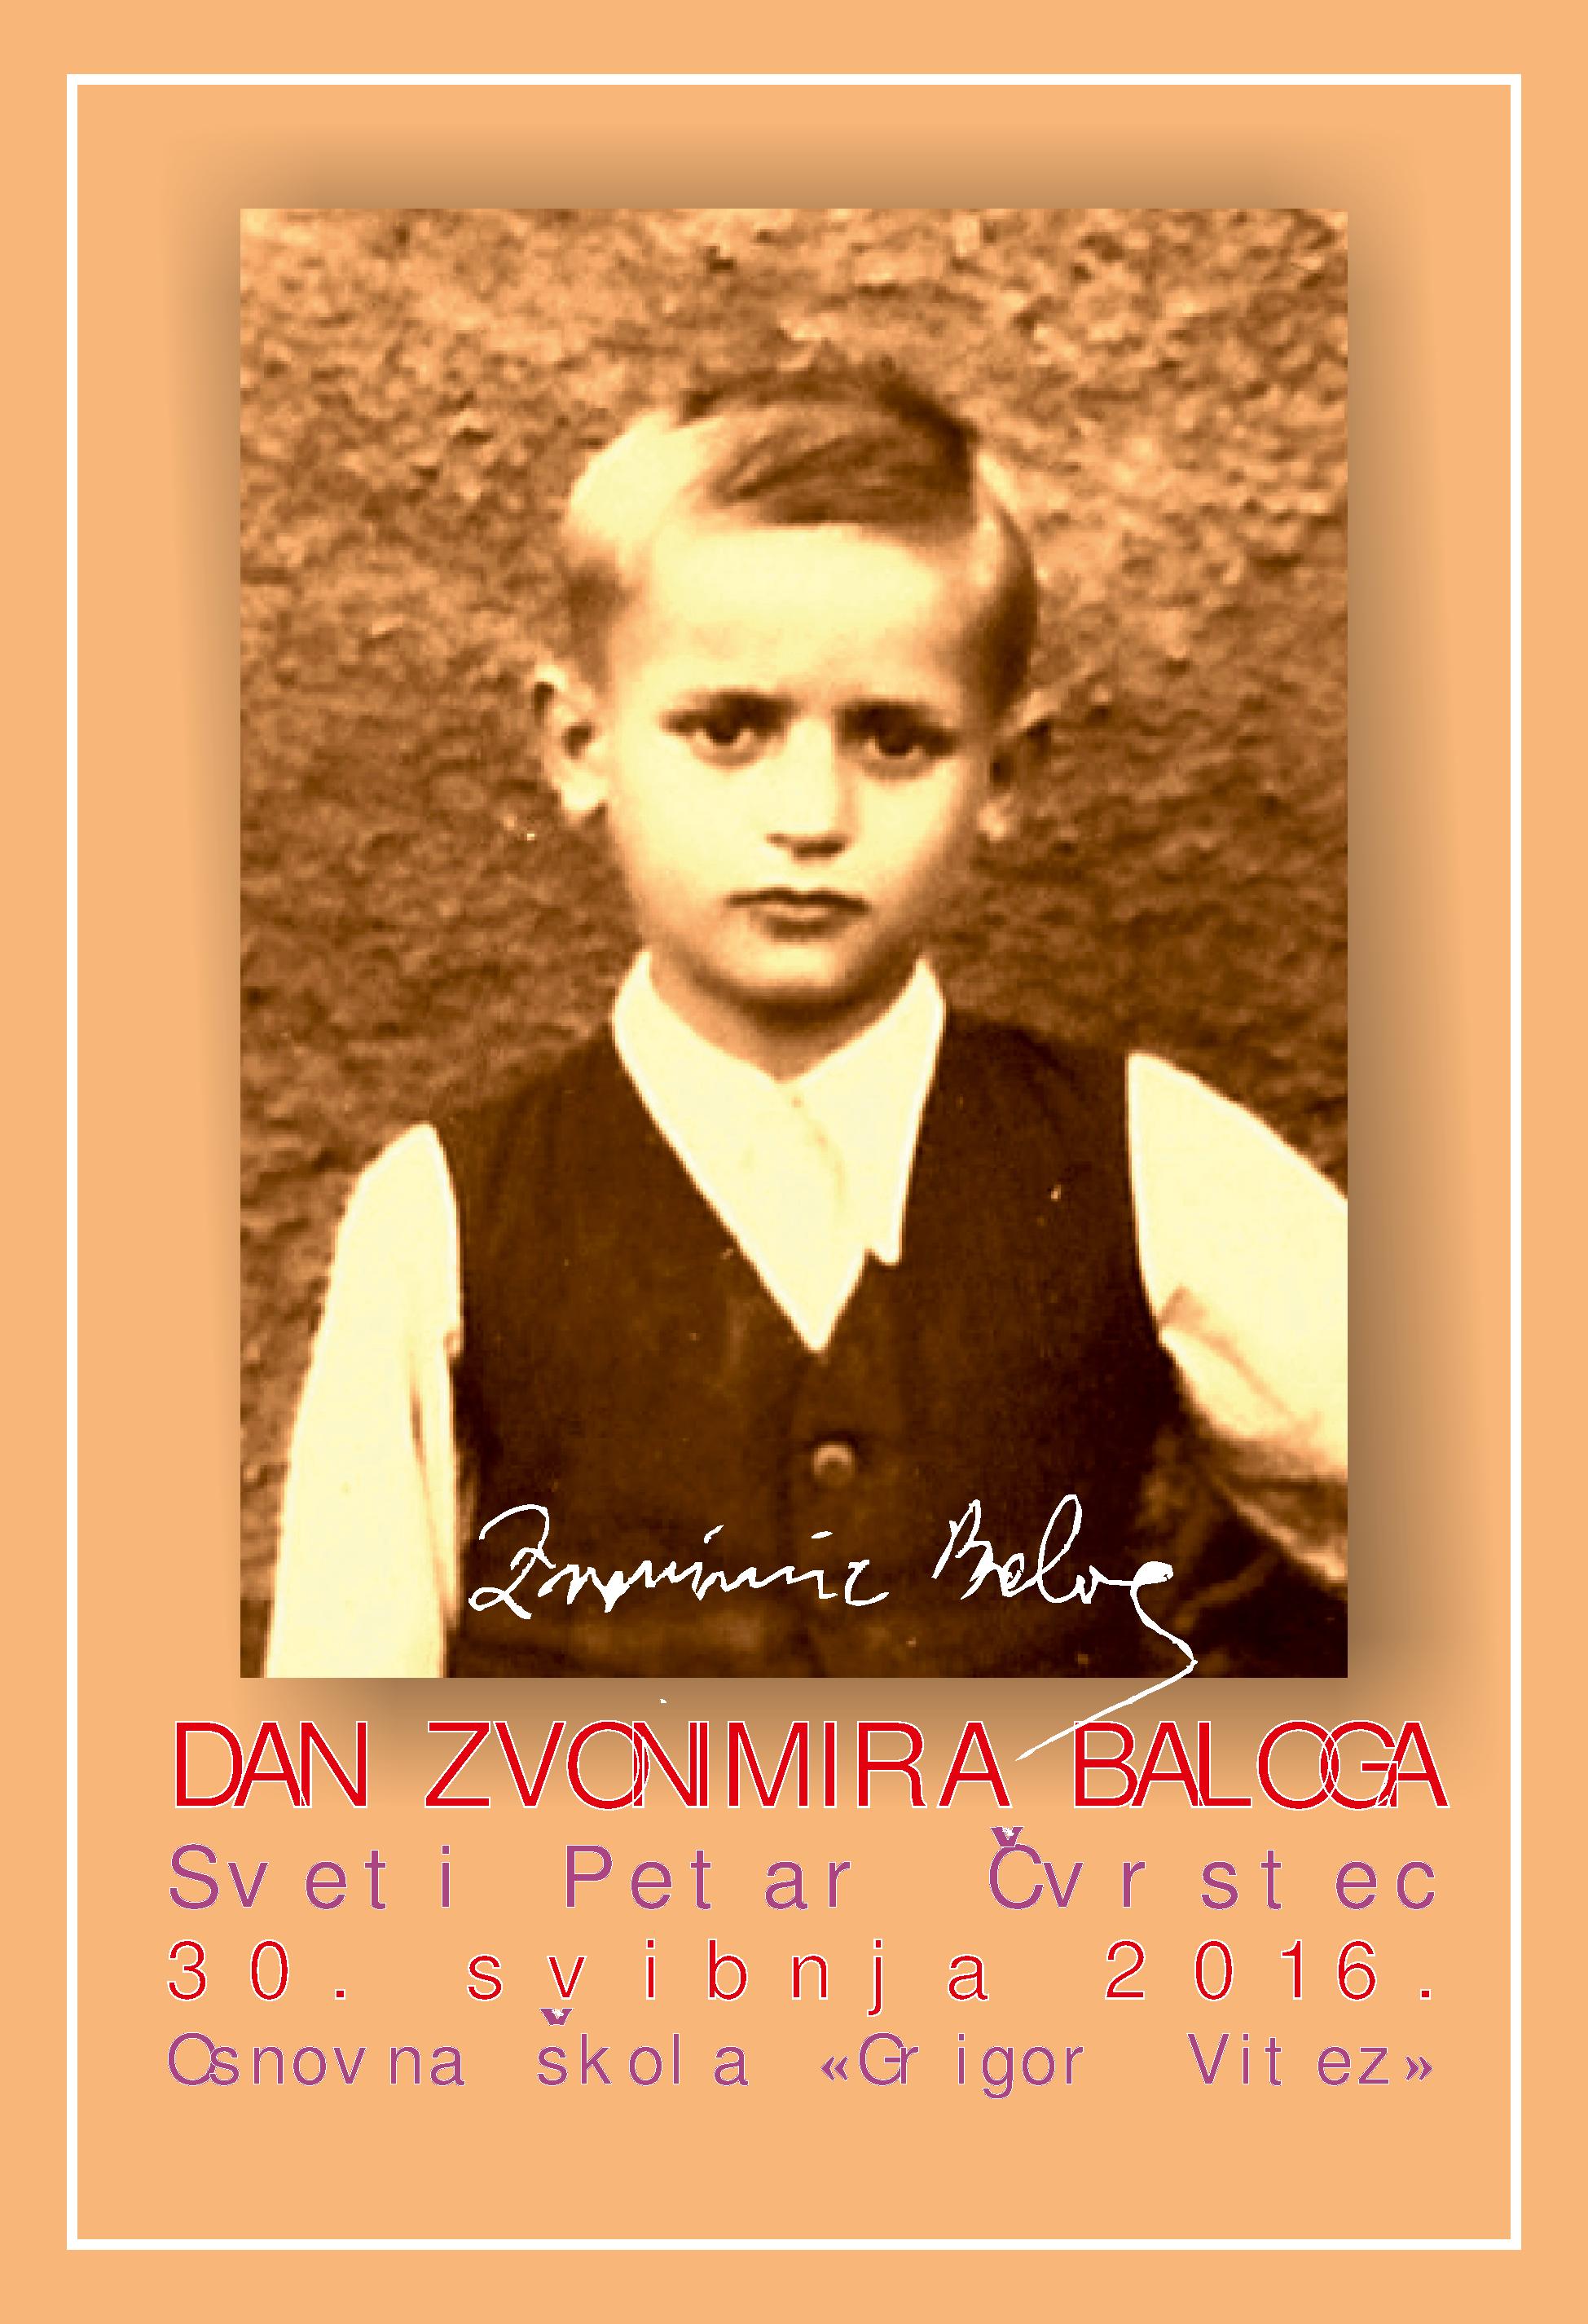 Dan Zvonimira Baloga plakat pdf page 001